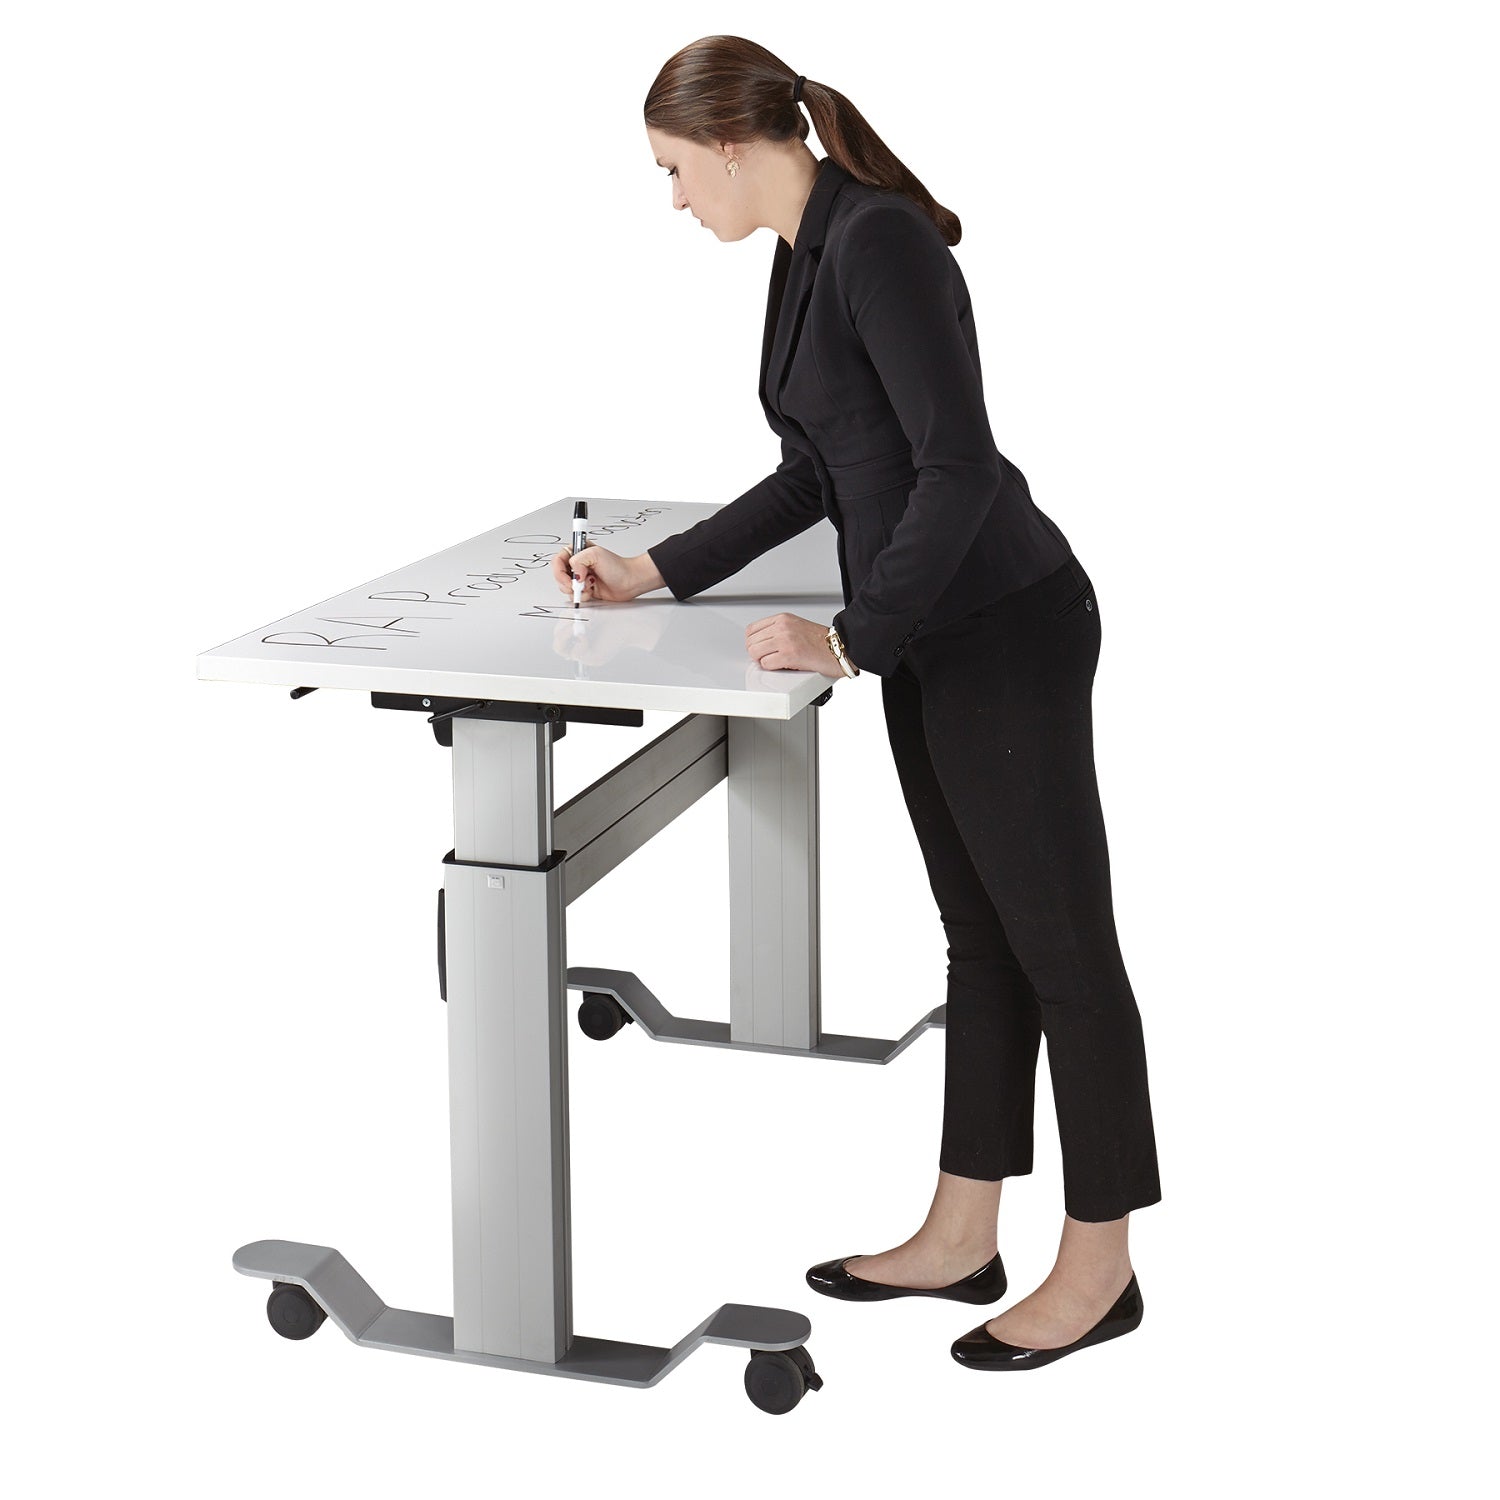 Eficiente LT Electric Height Adjustable Standing Desk with Flip Marker Board Top, 60" x 30"